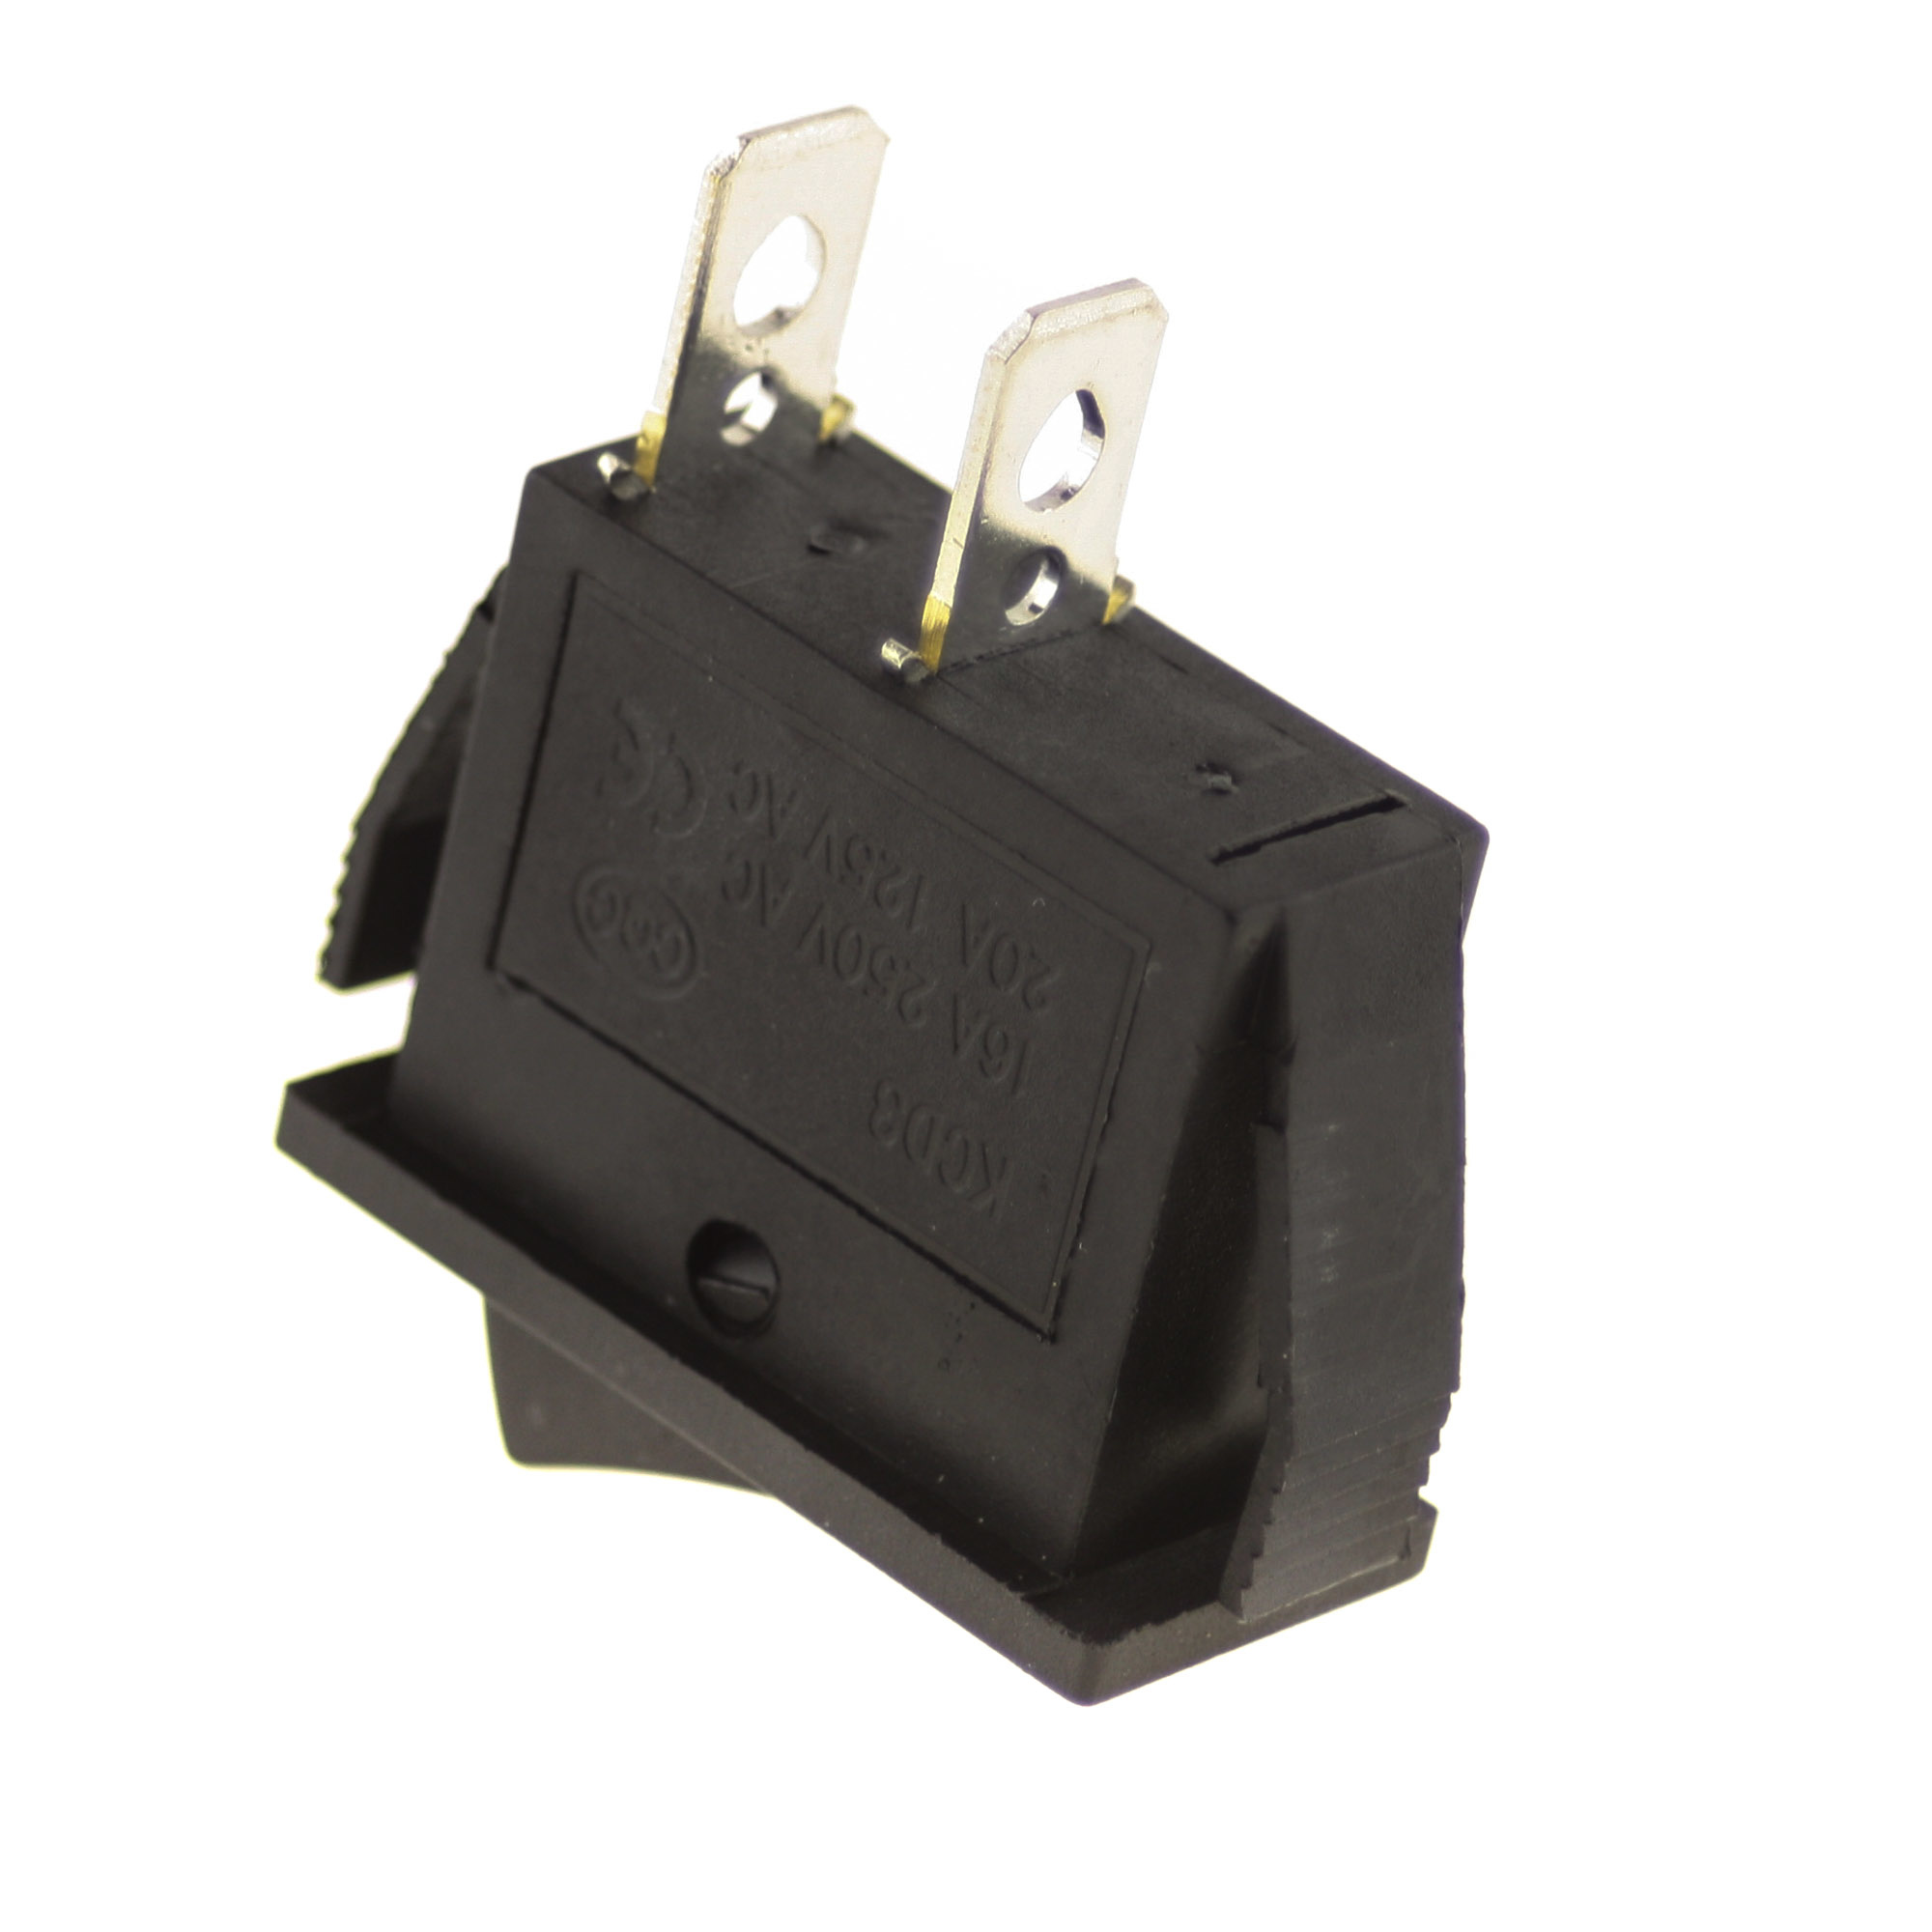 Switch I-0 250V 6A, 31x14mm, black